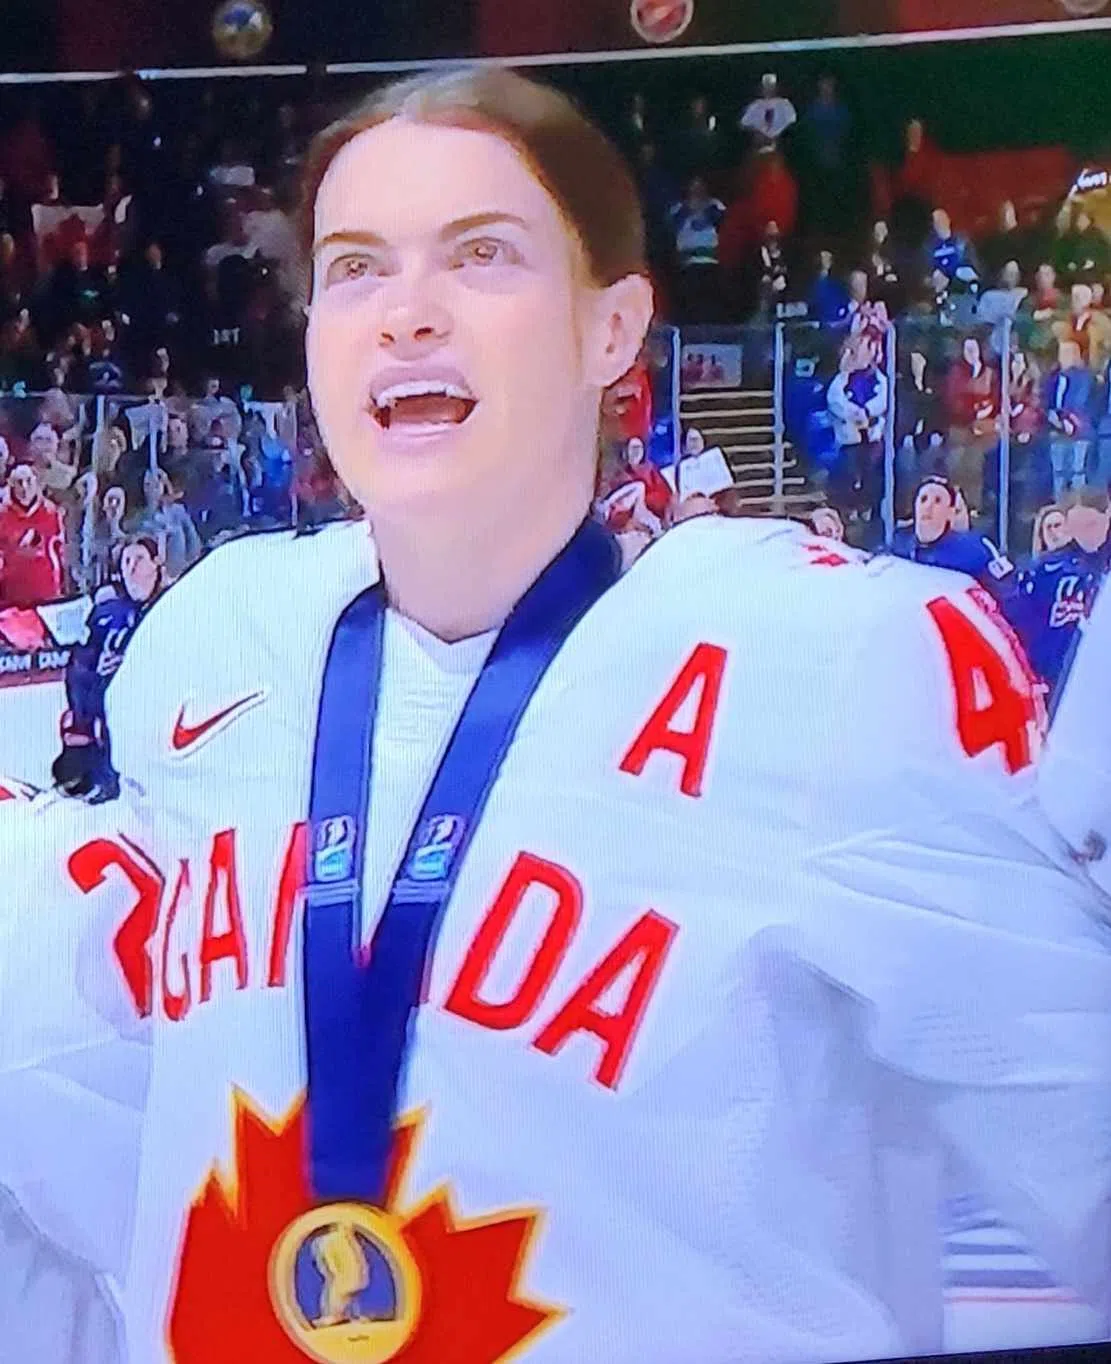 Nova Scotia Is Golden Again At The Women's World Hockey Championship!